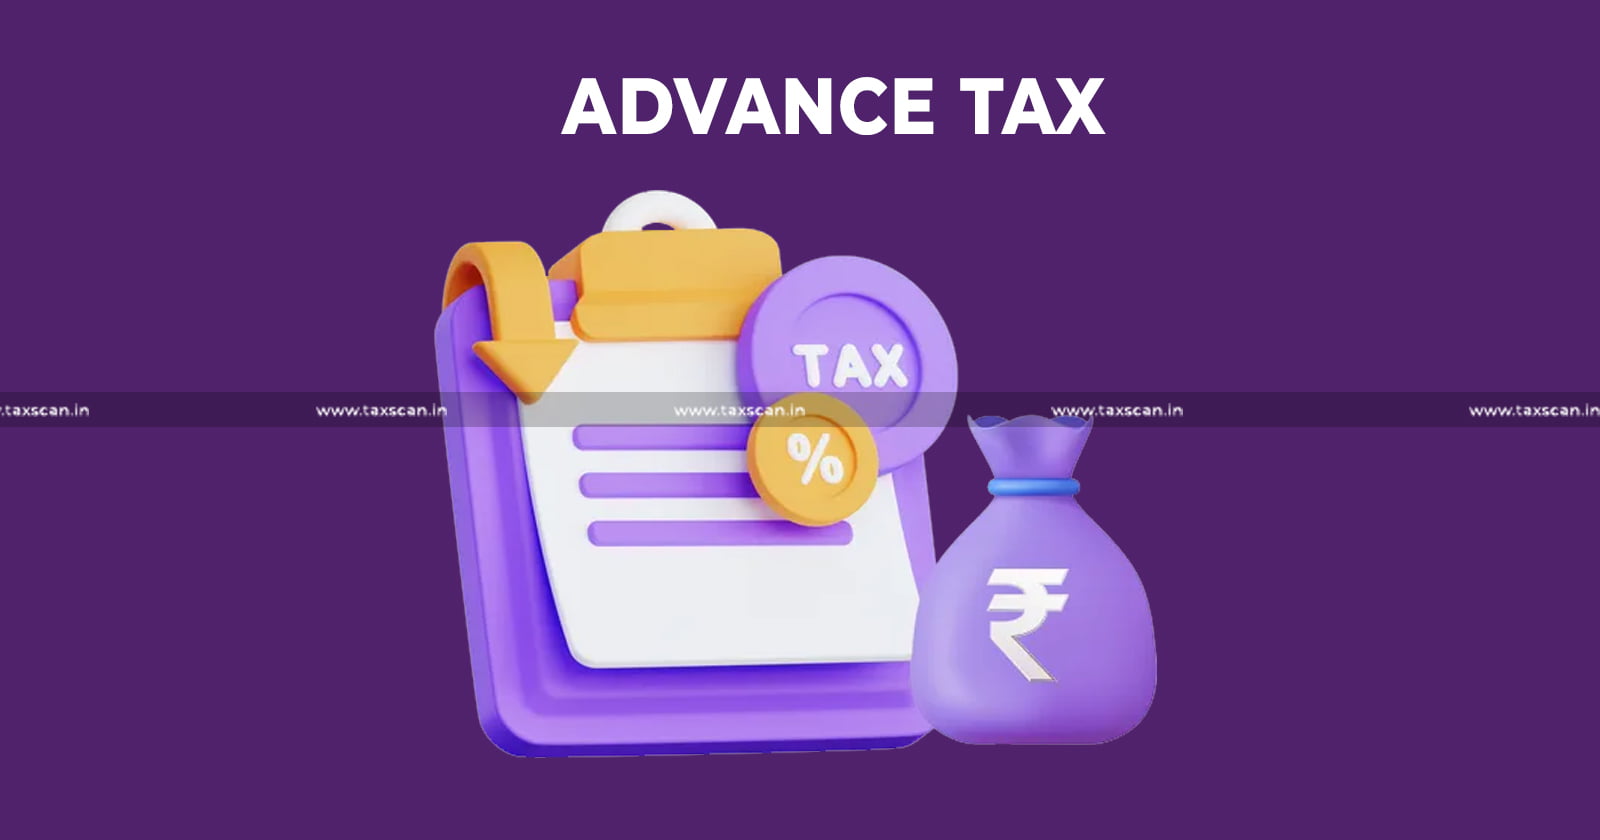 Kerala High Court - Kerala HC - Advance Tax deposit appeal - Tax appeal deposit requirement - Financial implications of tax appeals - Taxscan